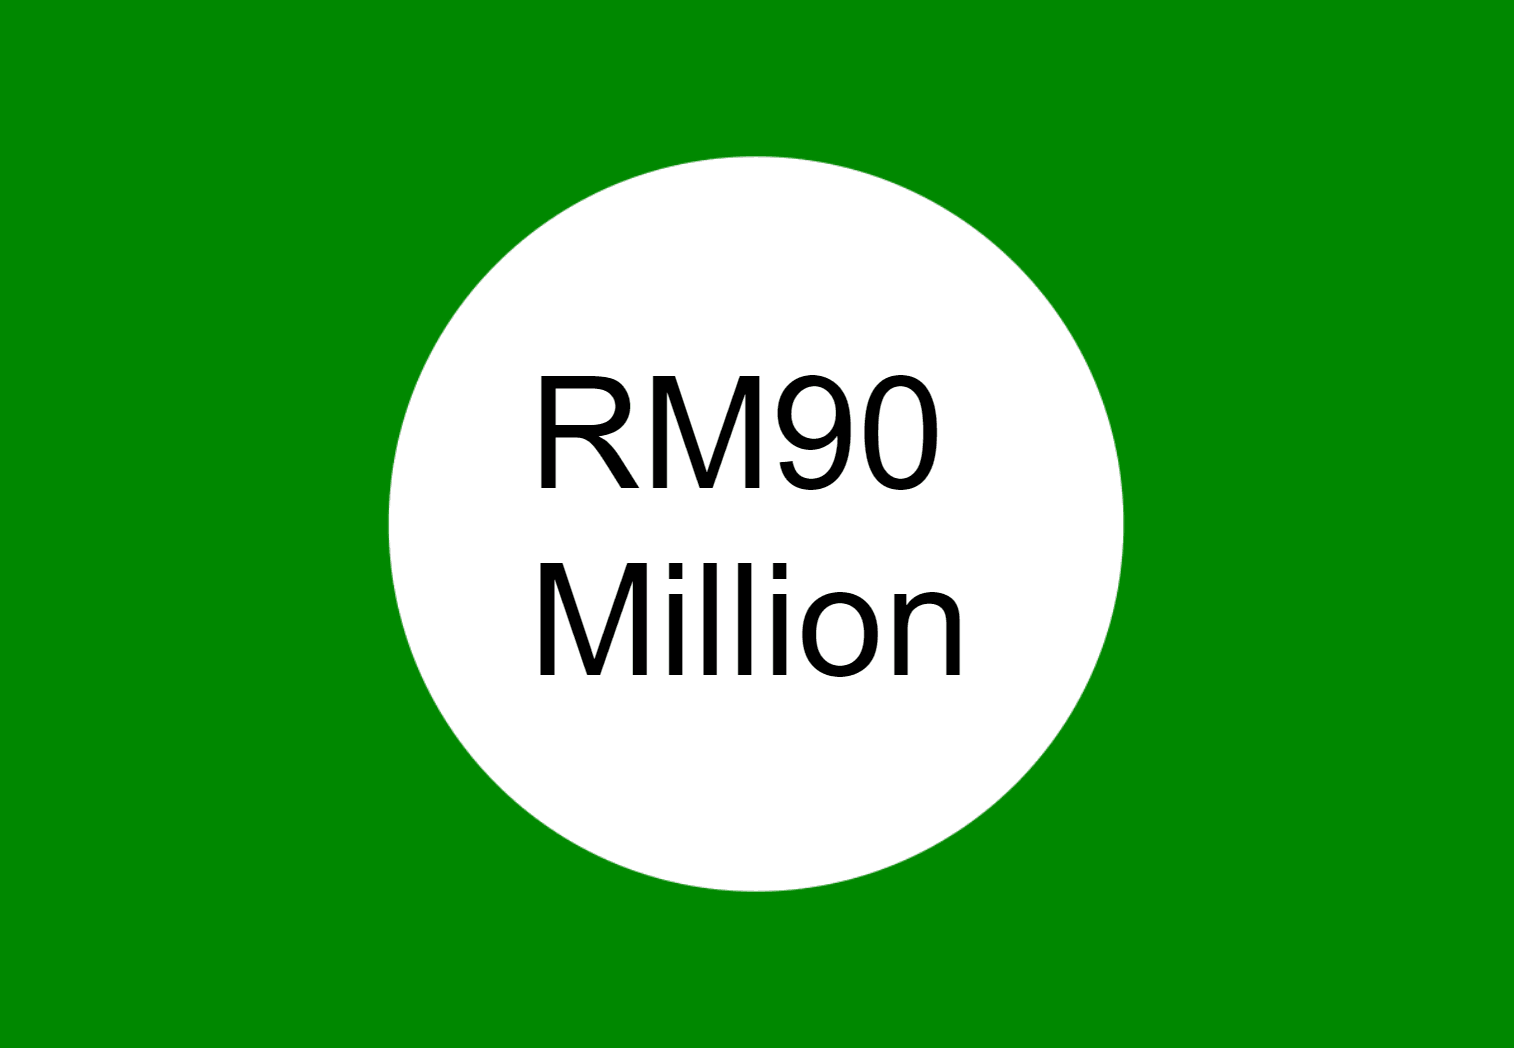 Sarawak Report alleged PAS received RM90 million from Najib